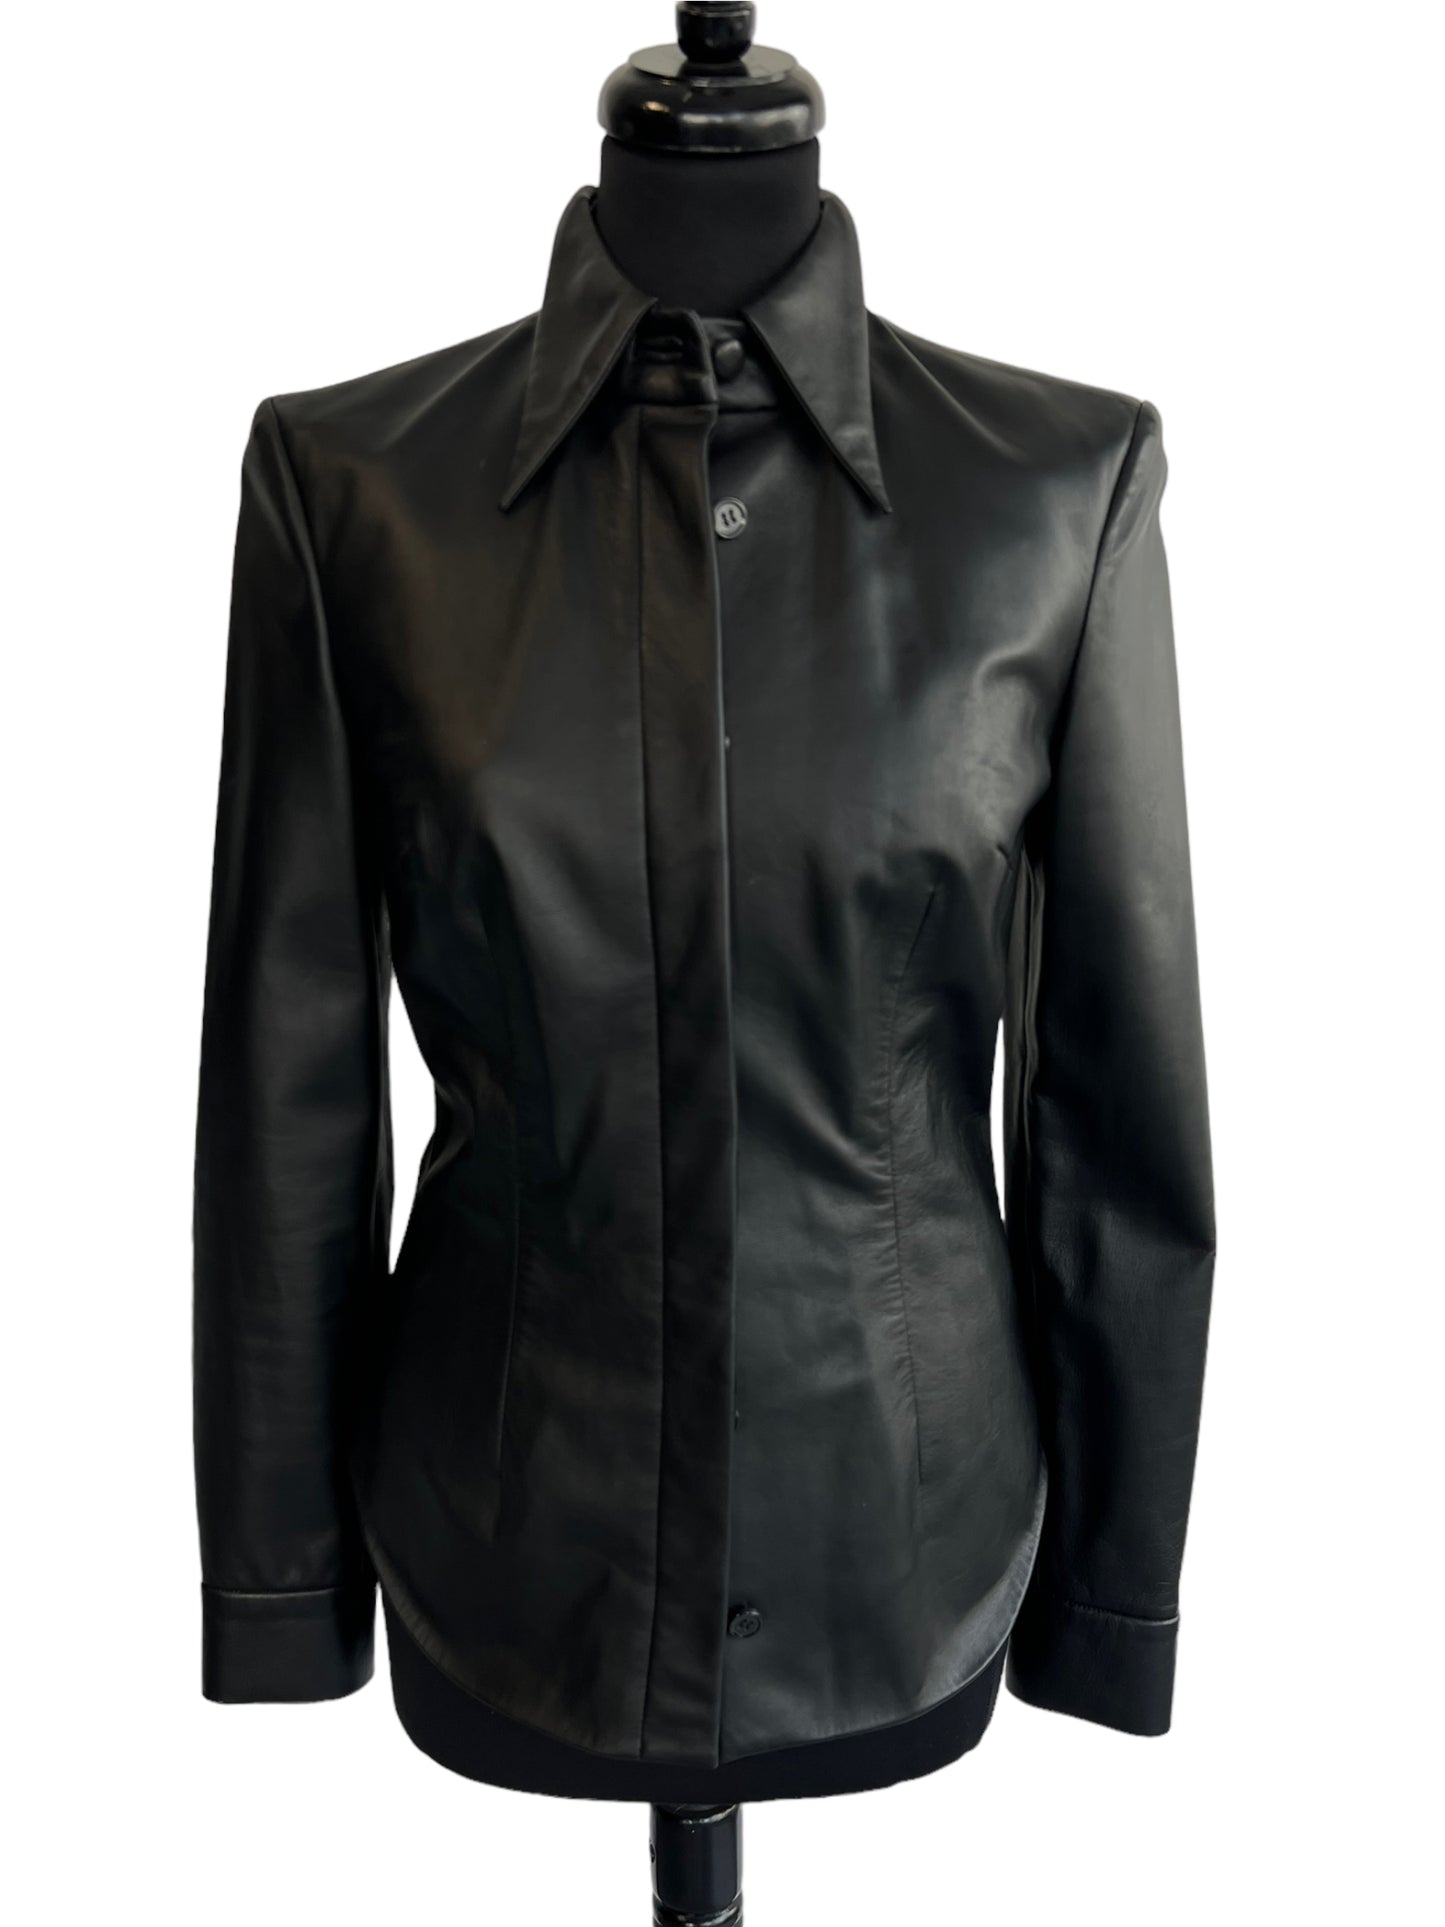 PRITCH London - Leather Shirt Black - Size XS